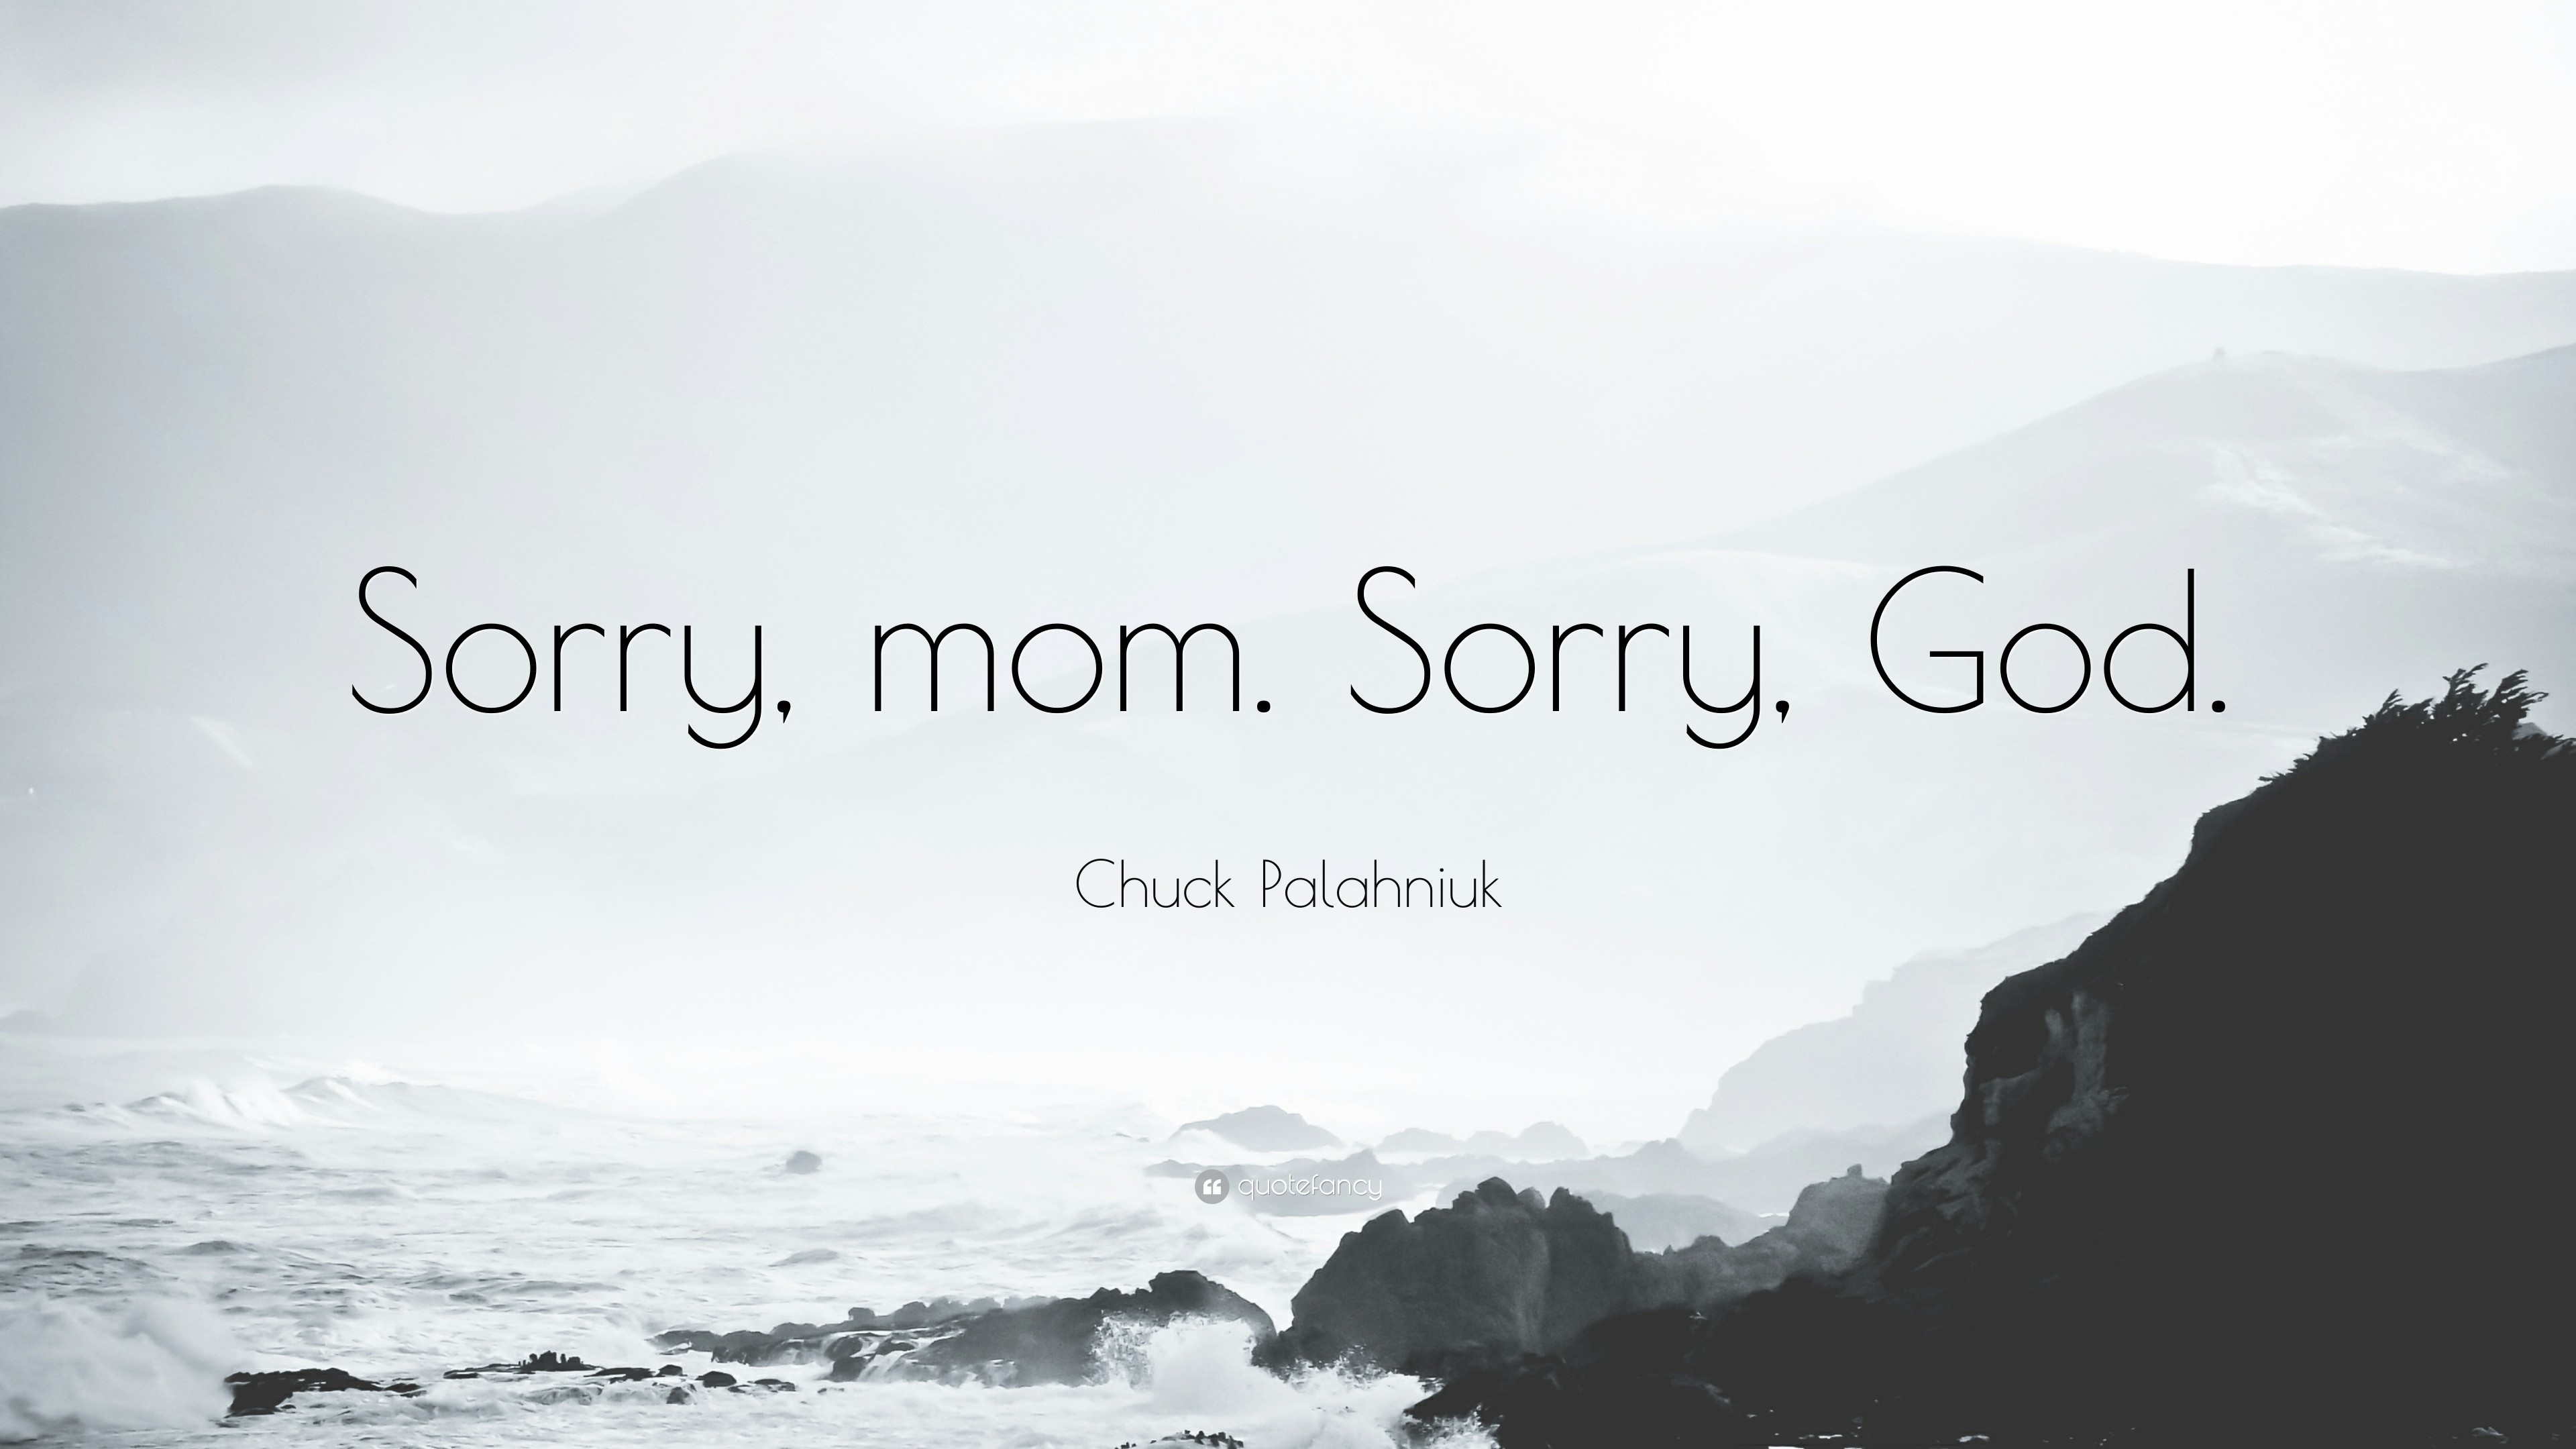 3840x2160 Chuck Palahniuk Quote: “Sorry, mom. Sorry, God.”